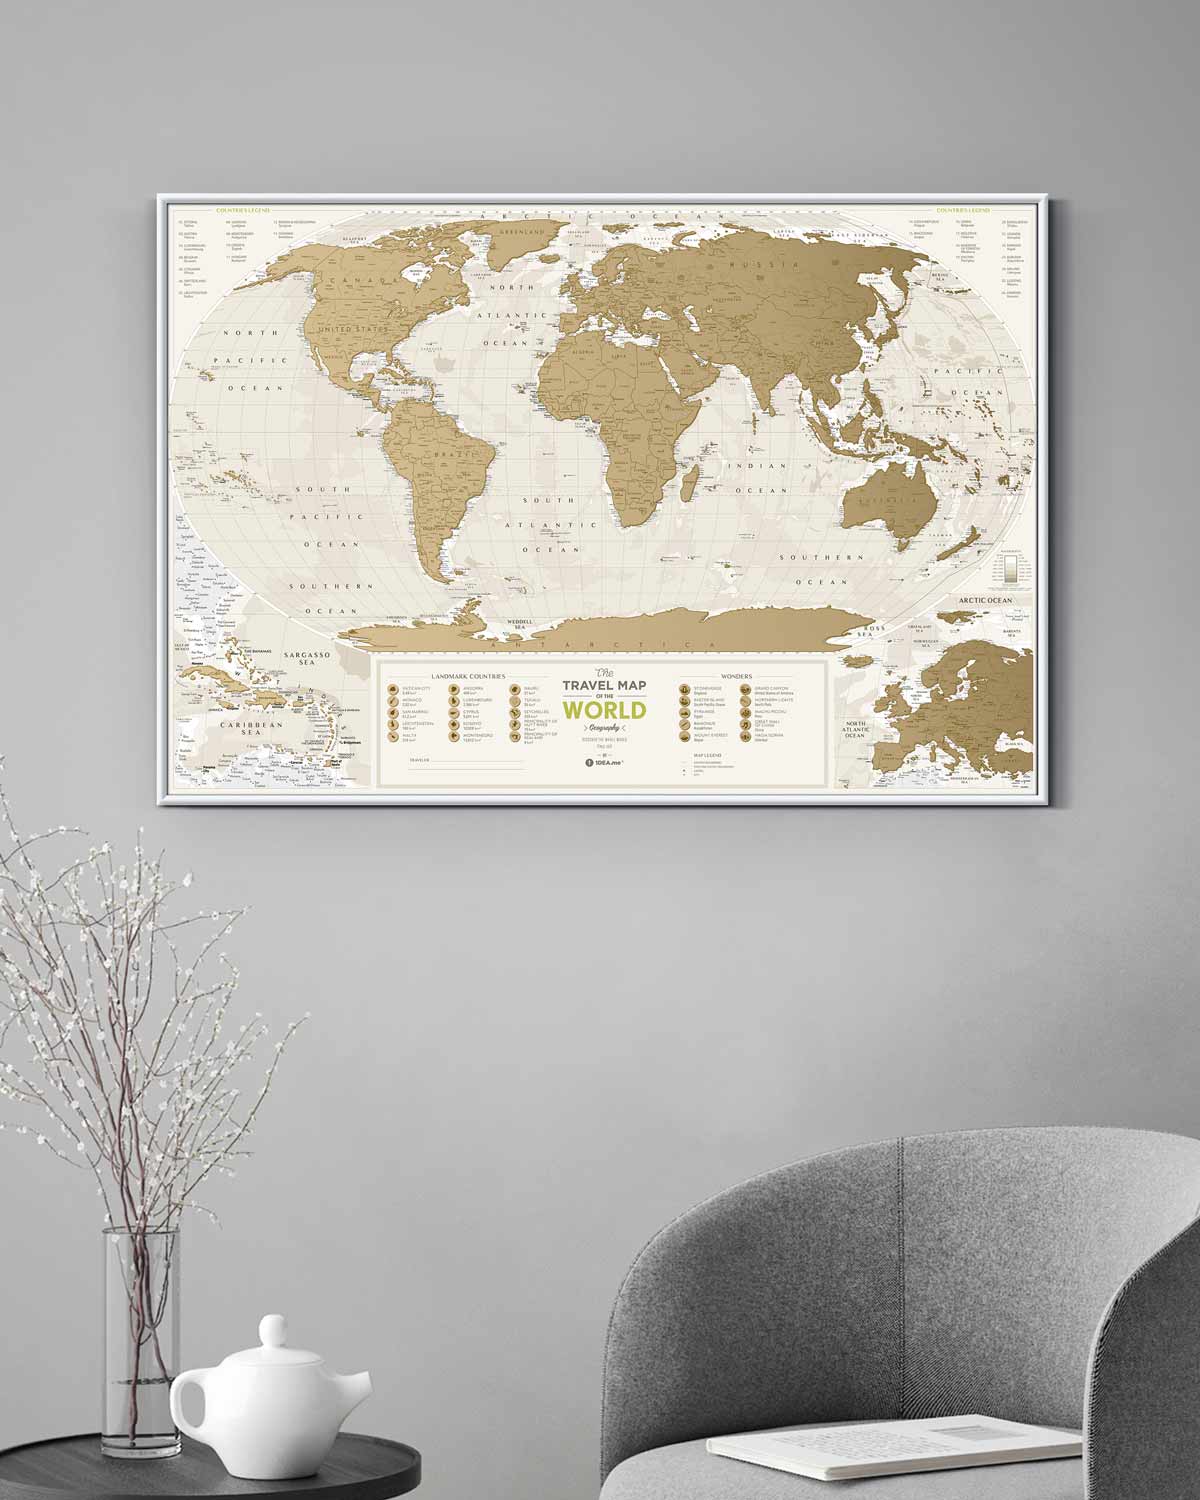 Scratch Map Geography World interior